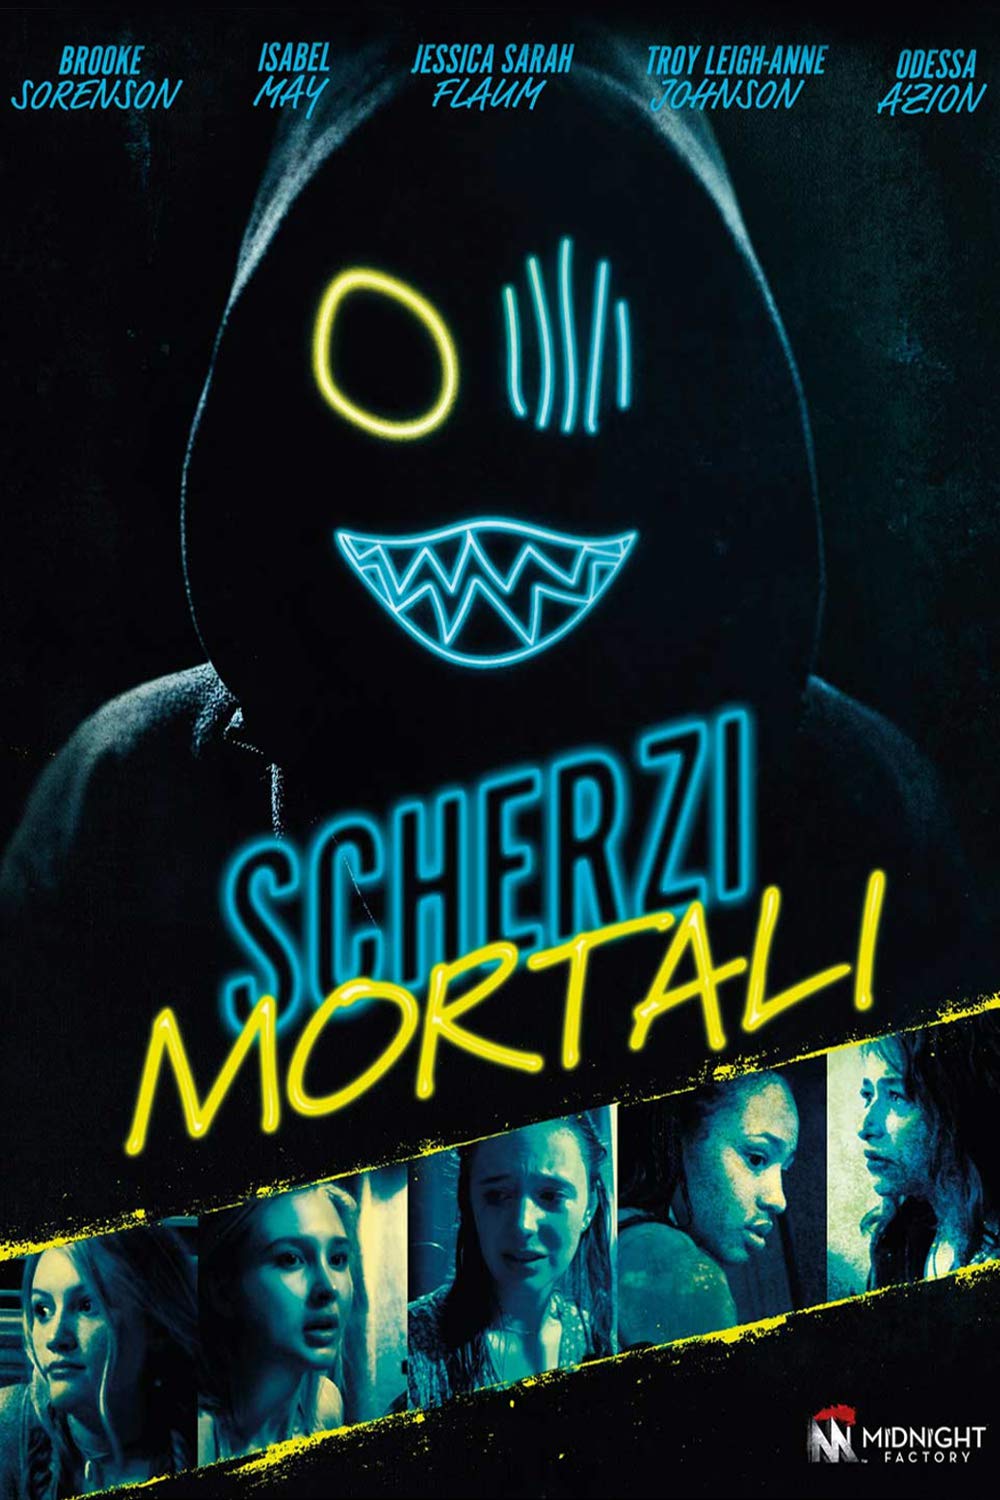 Scherzi mortali [HD] (2020)